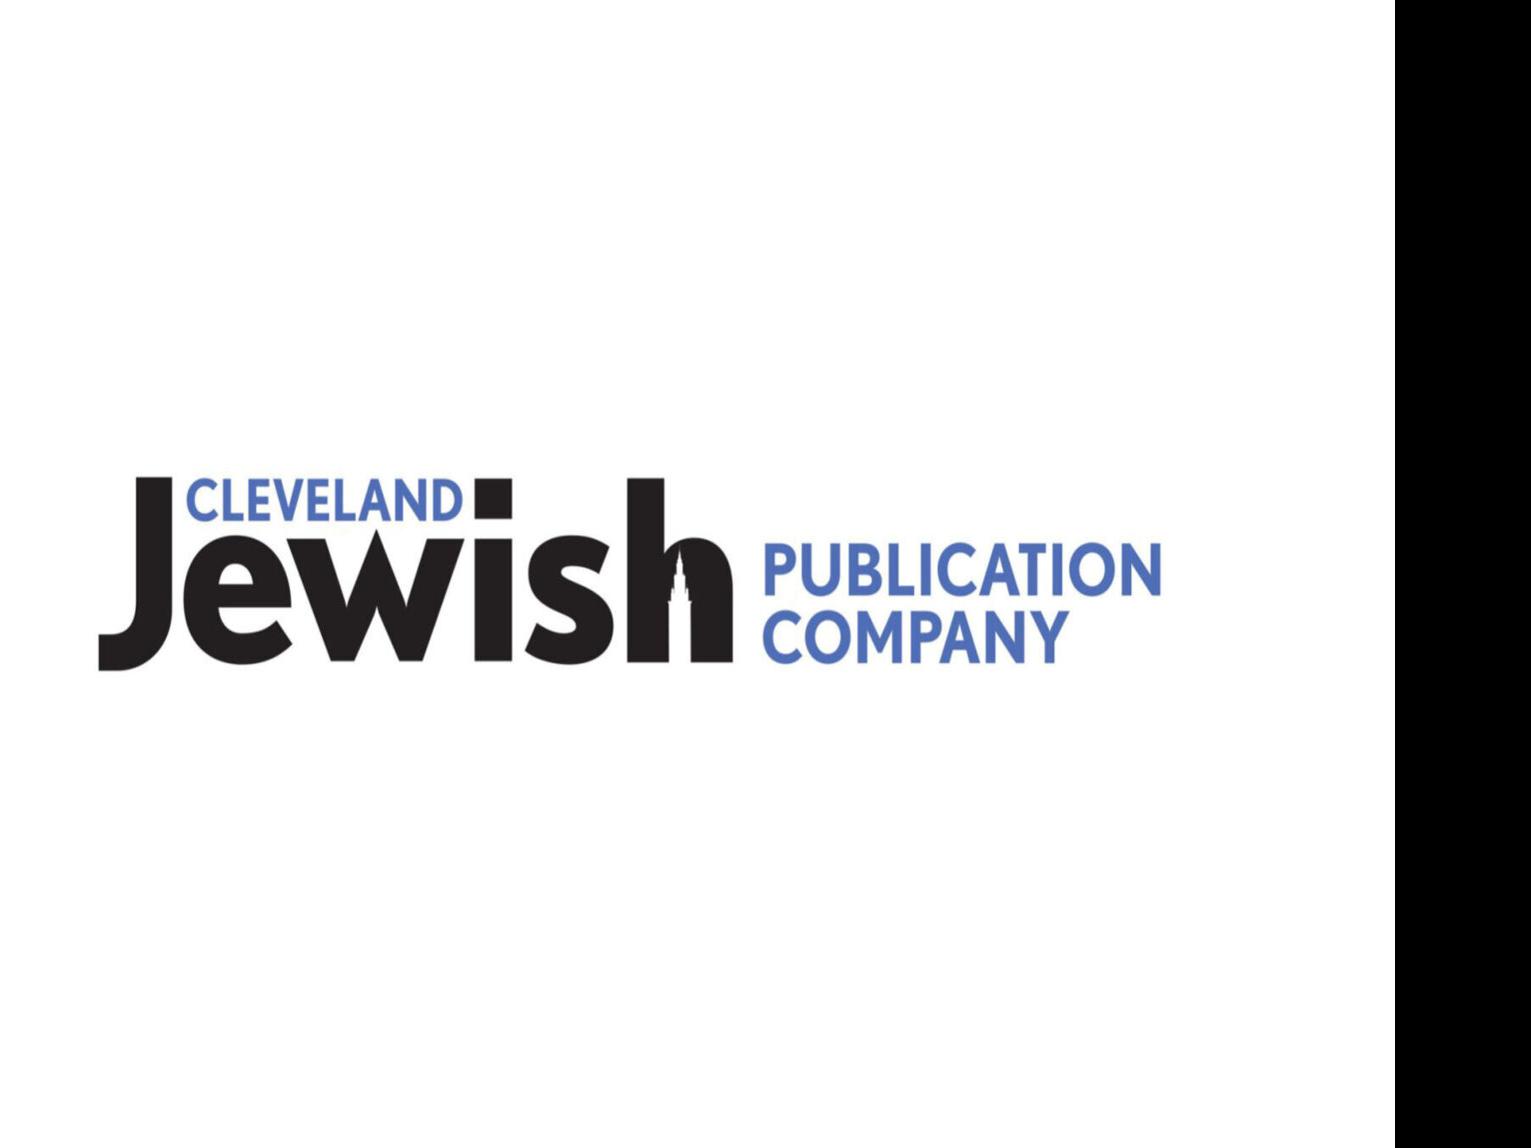 Cleveland Jewish News, Nov. 2, 2018 by Cleveland Jewish Publication Company  - Issuu